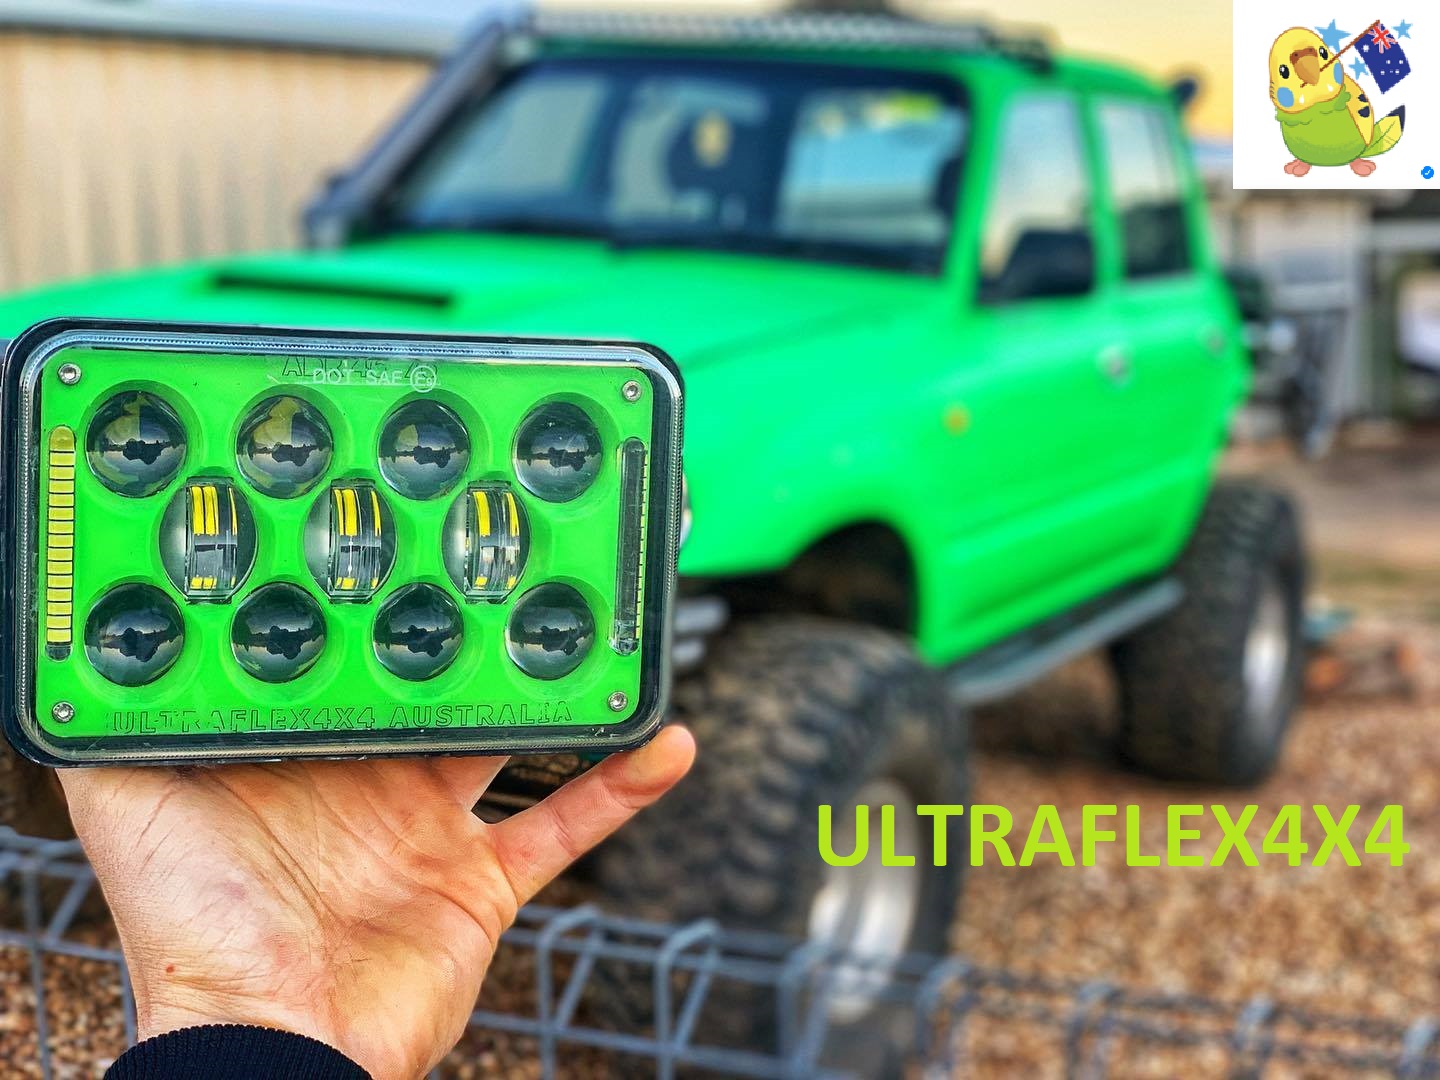 Ultraflex4x4